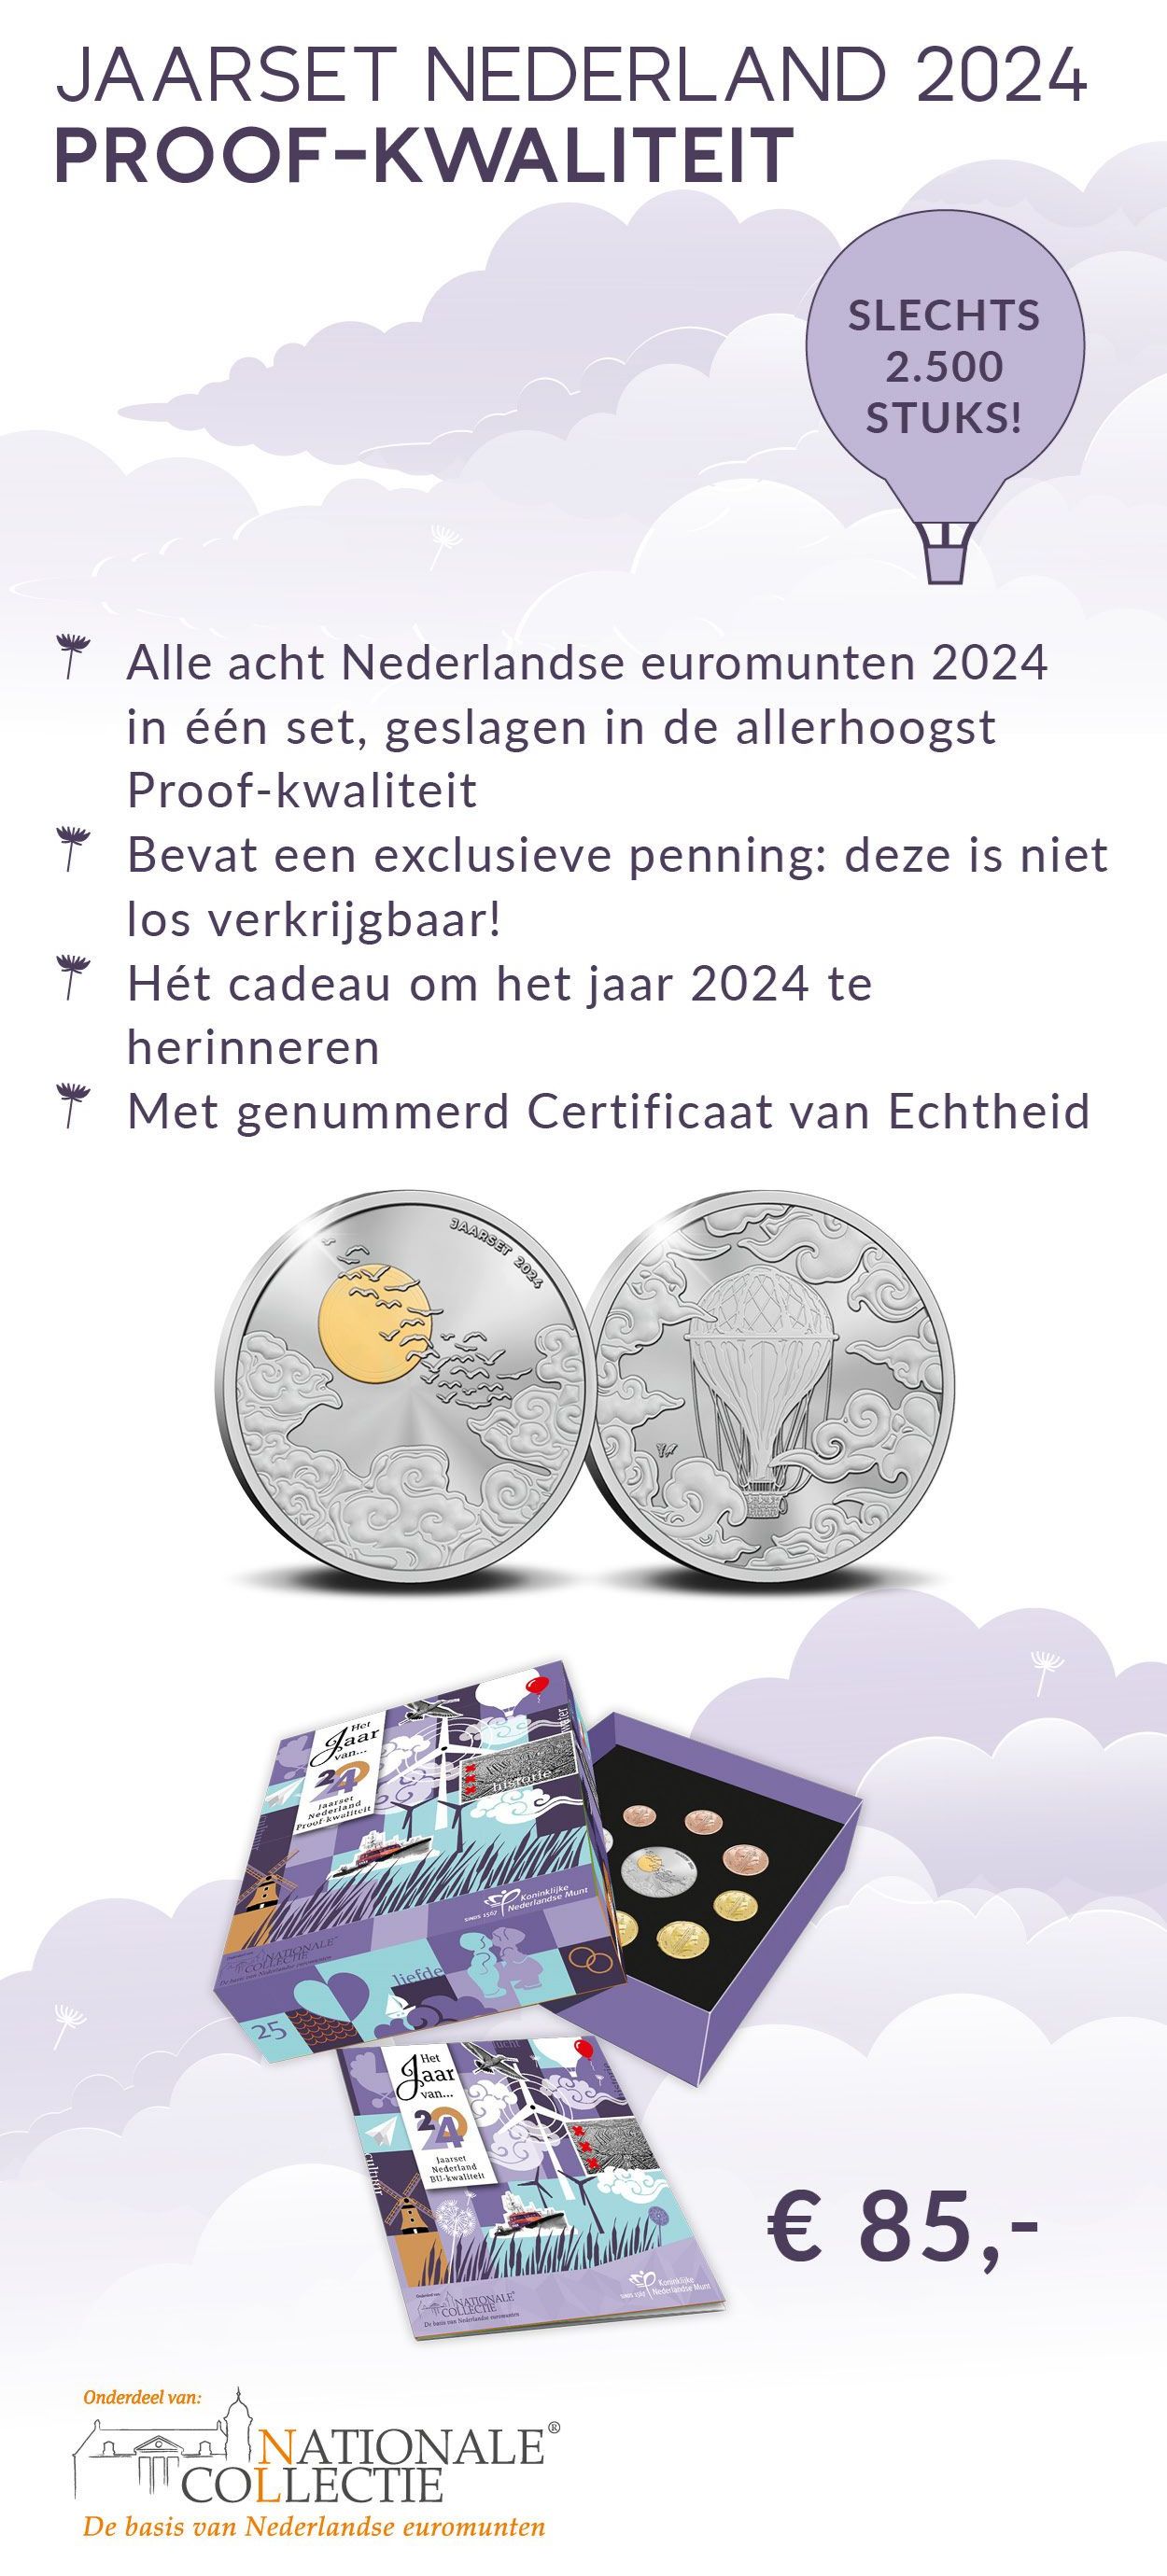 Jaarset Nederland 2024 Proof-kwaliteit